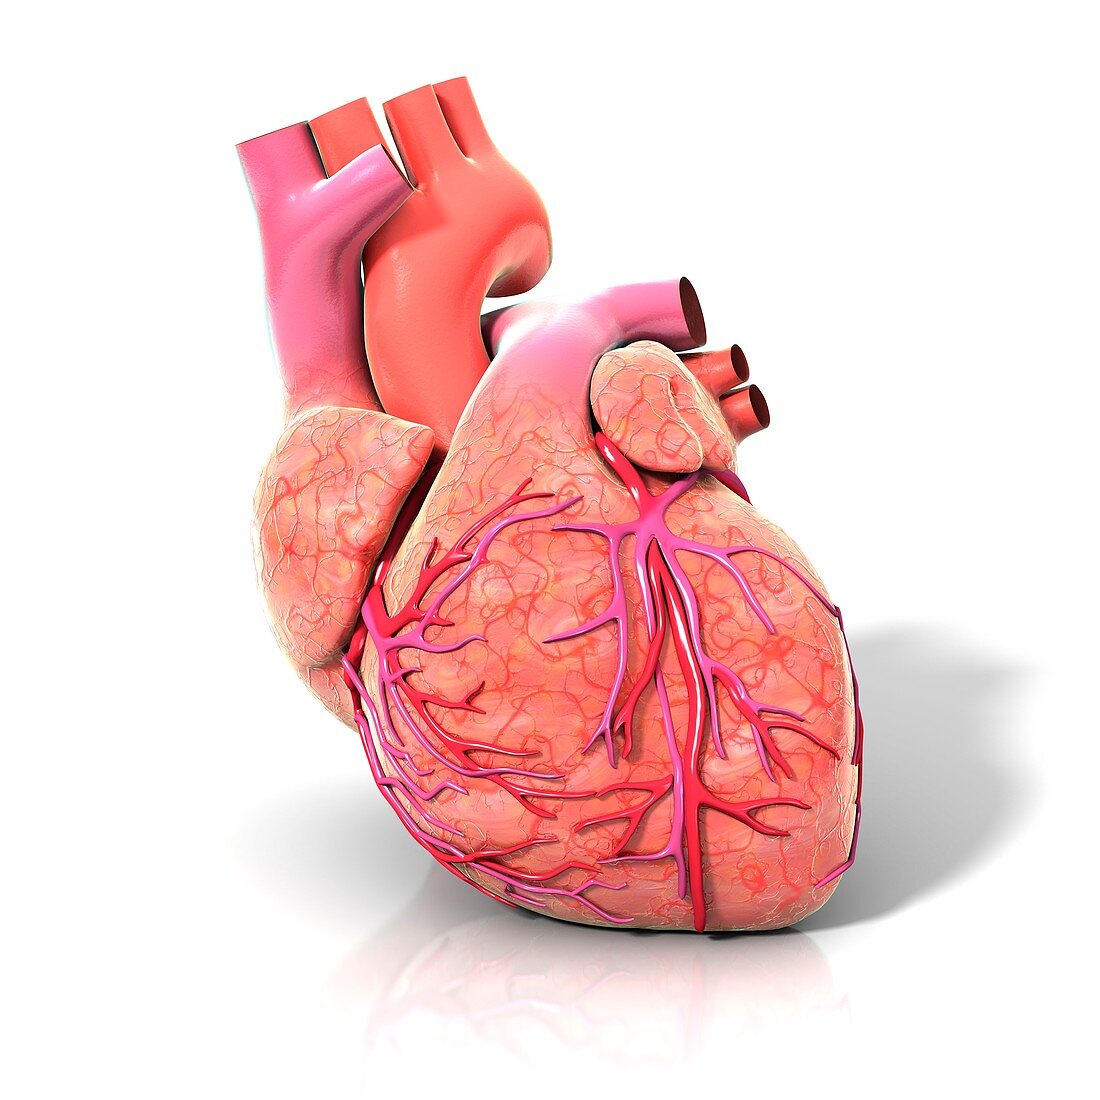 Heart and coronary arteries,artwork